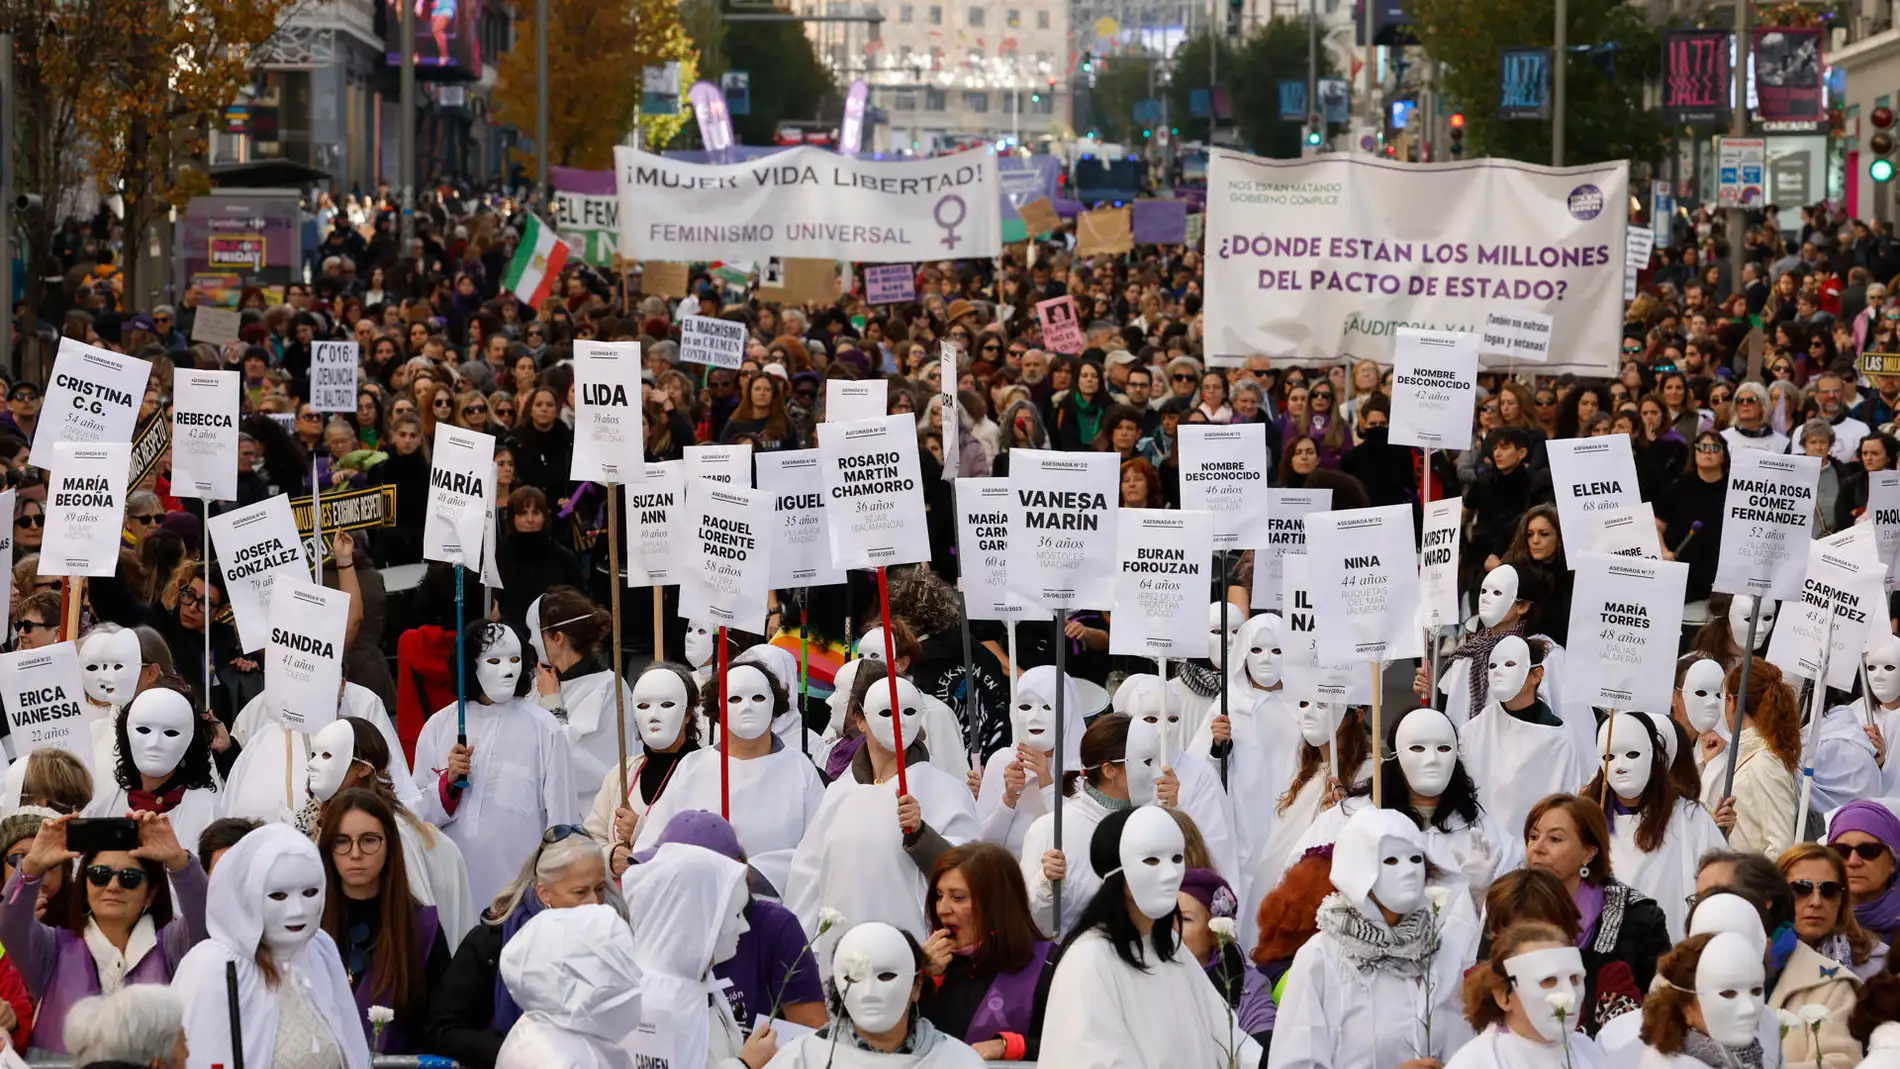 El feminismo toma las calles contra la violencia machista: "Si tocan a una, nos tocan a todas"